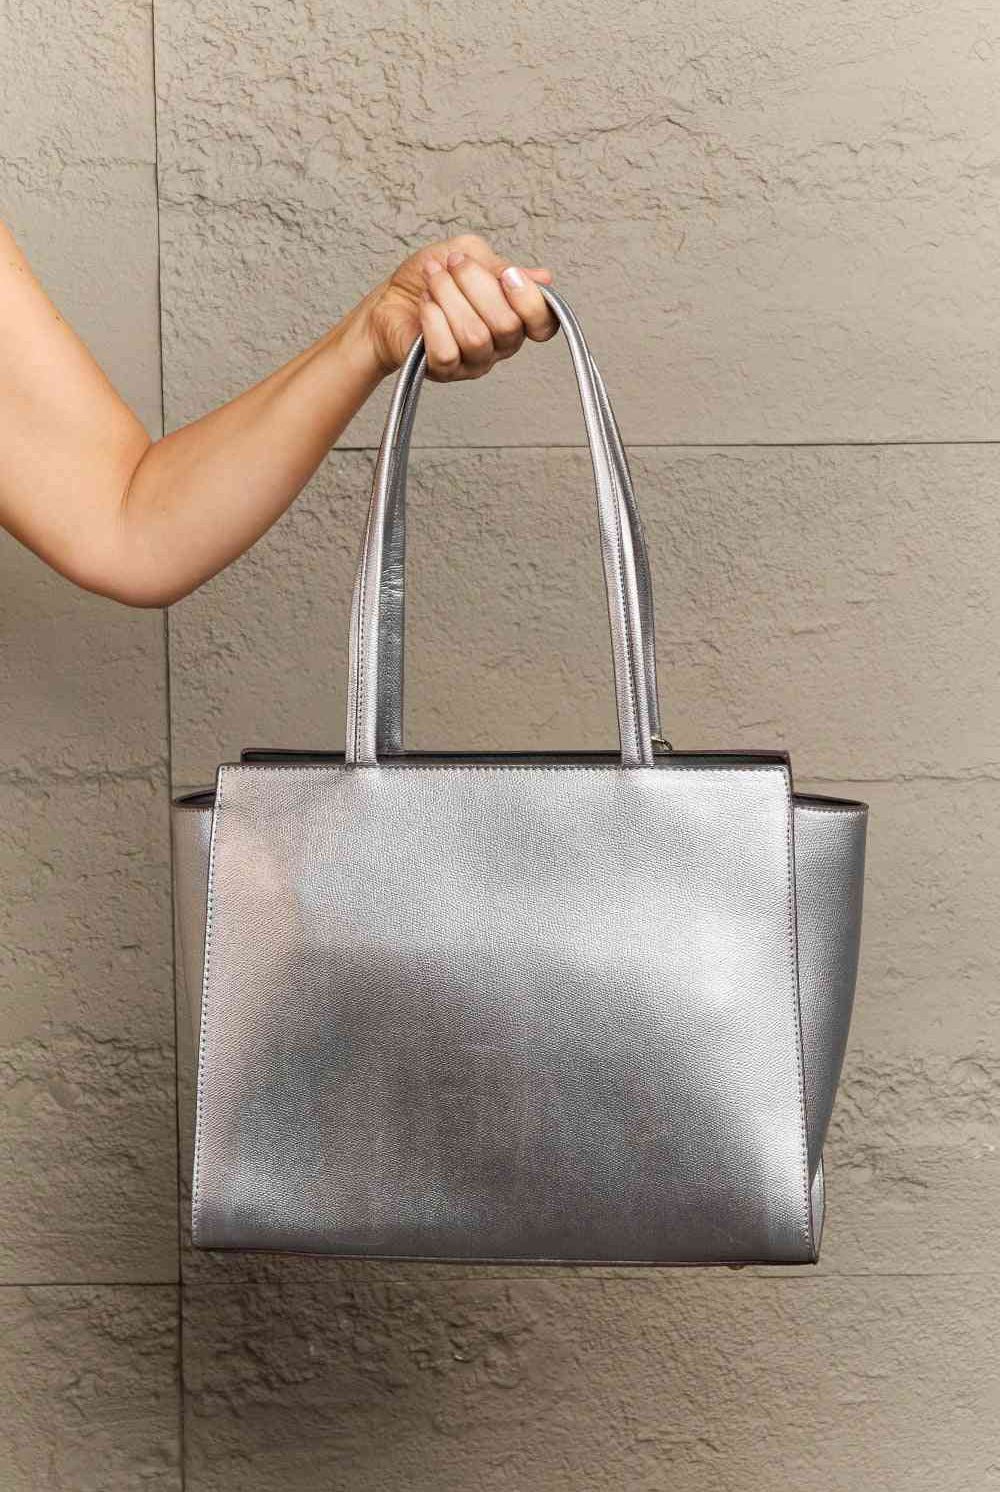 Rosy Brown Nicole Lee USA Regina 3-Piece Satchel Bag Set Gifts